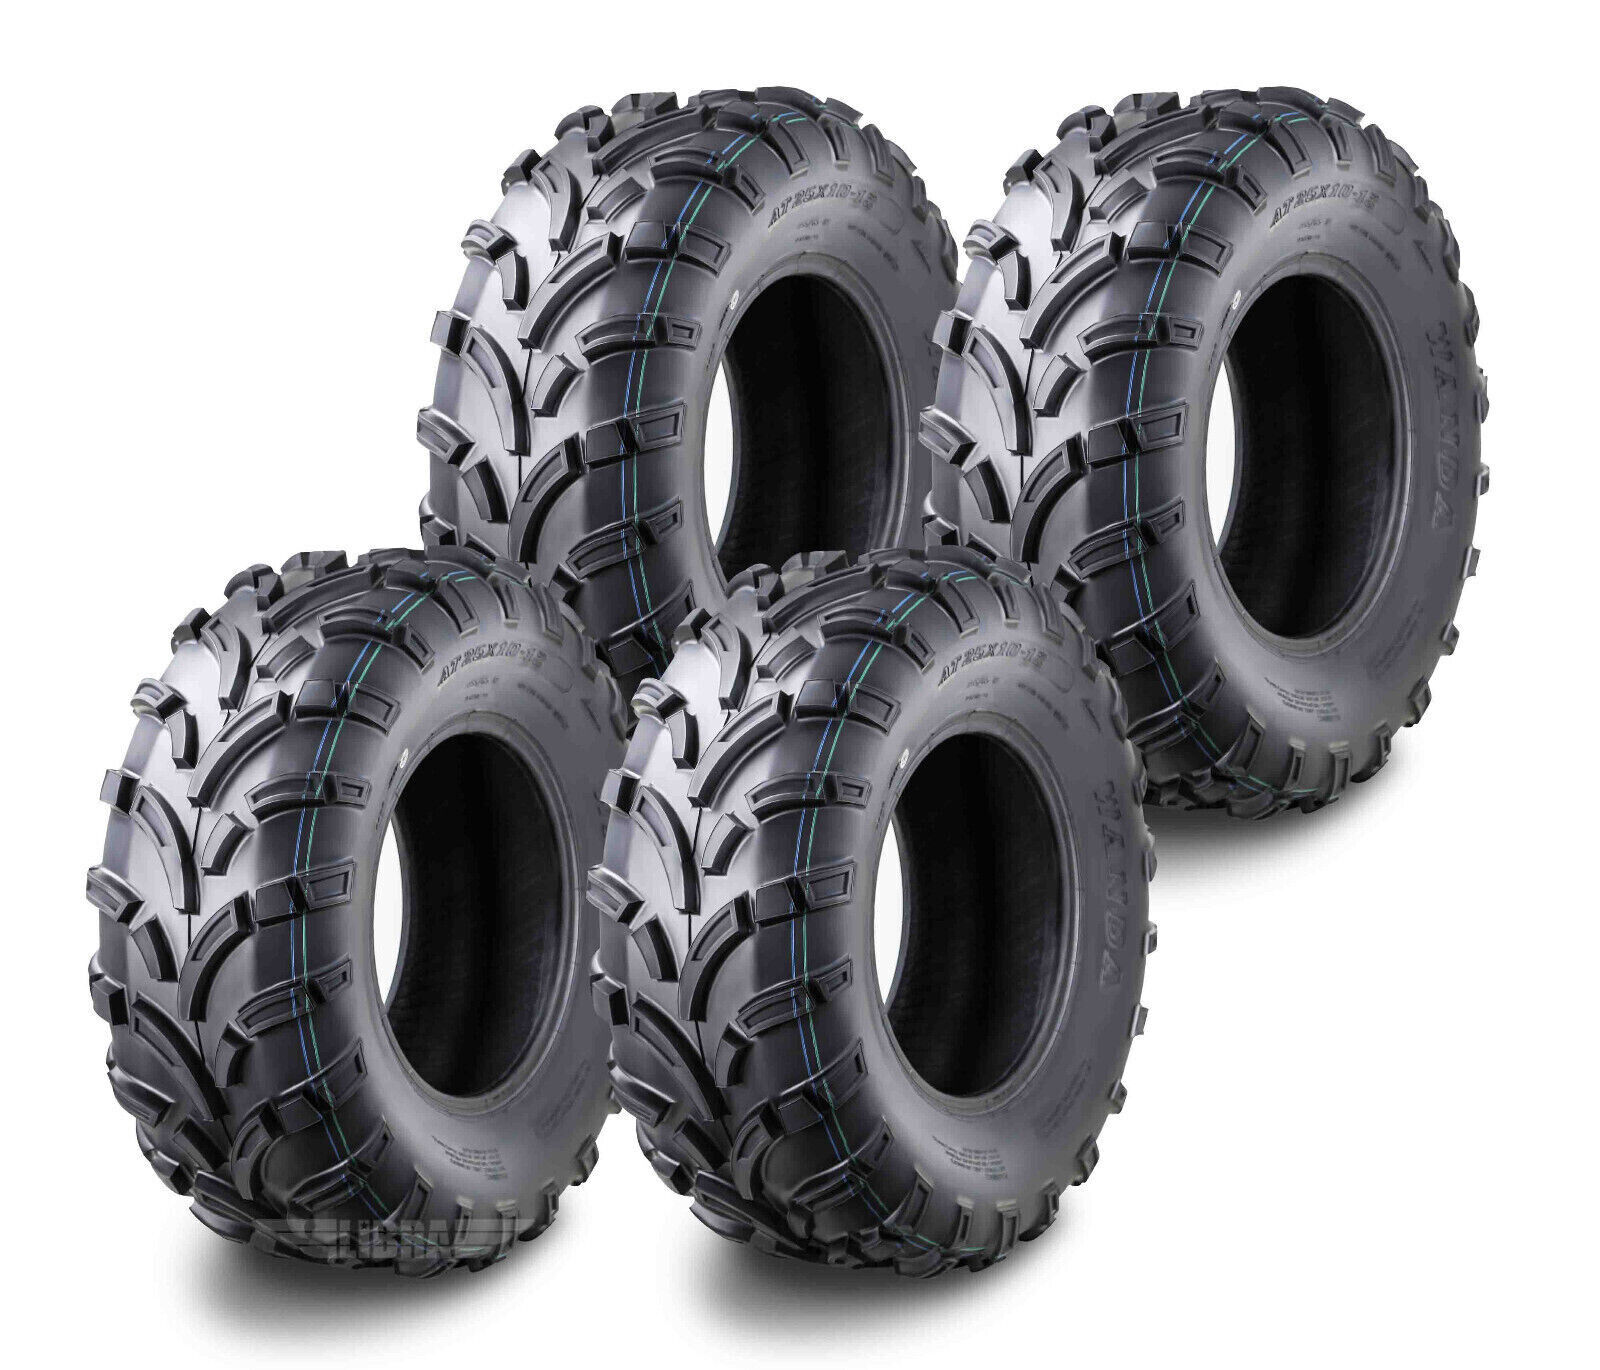 25x10-12 25x10x12 Complete Set WANDA Lit Mud ATV Tires fit 05-06 Kubota RTV 900